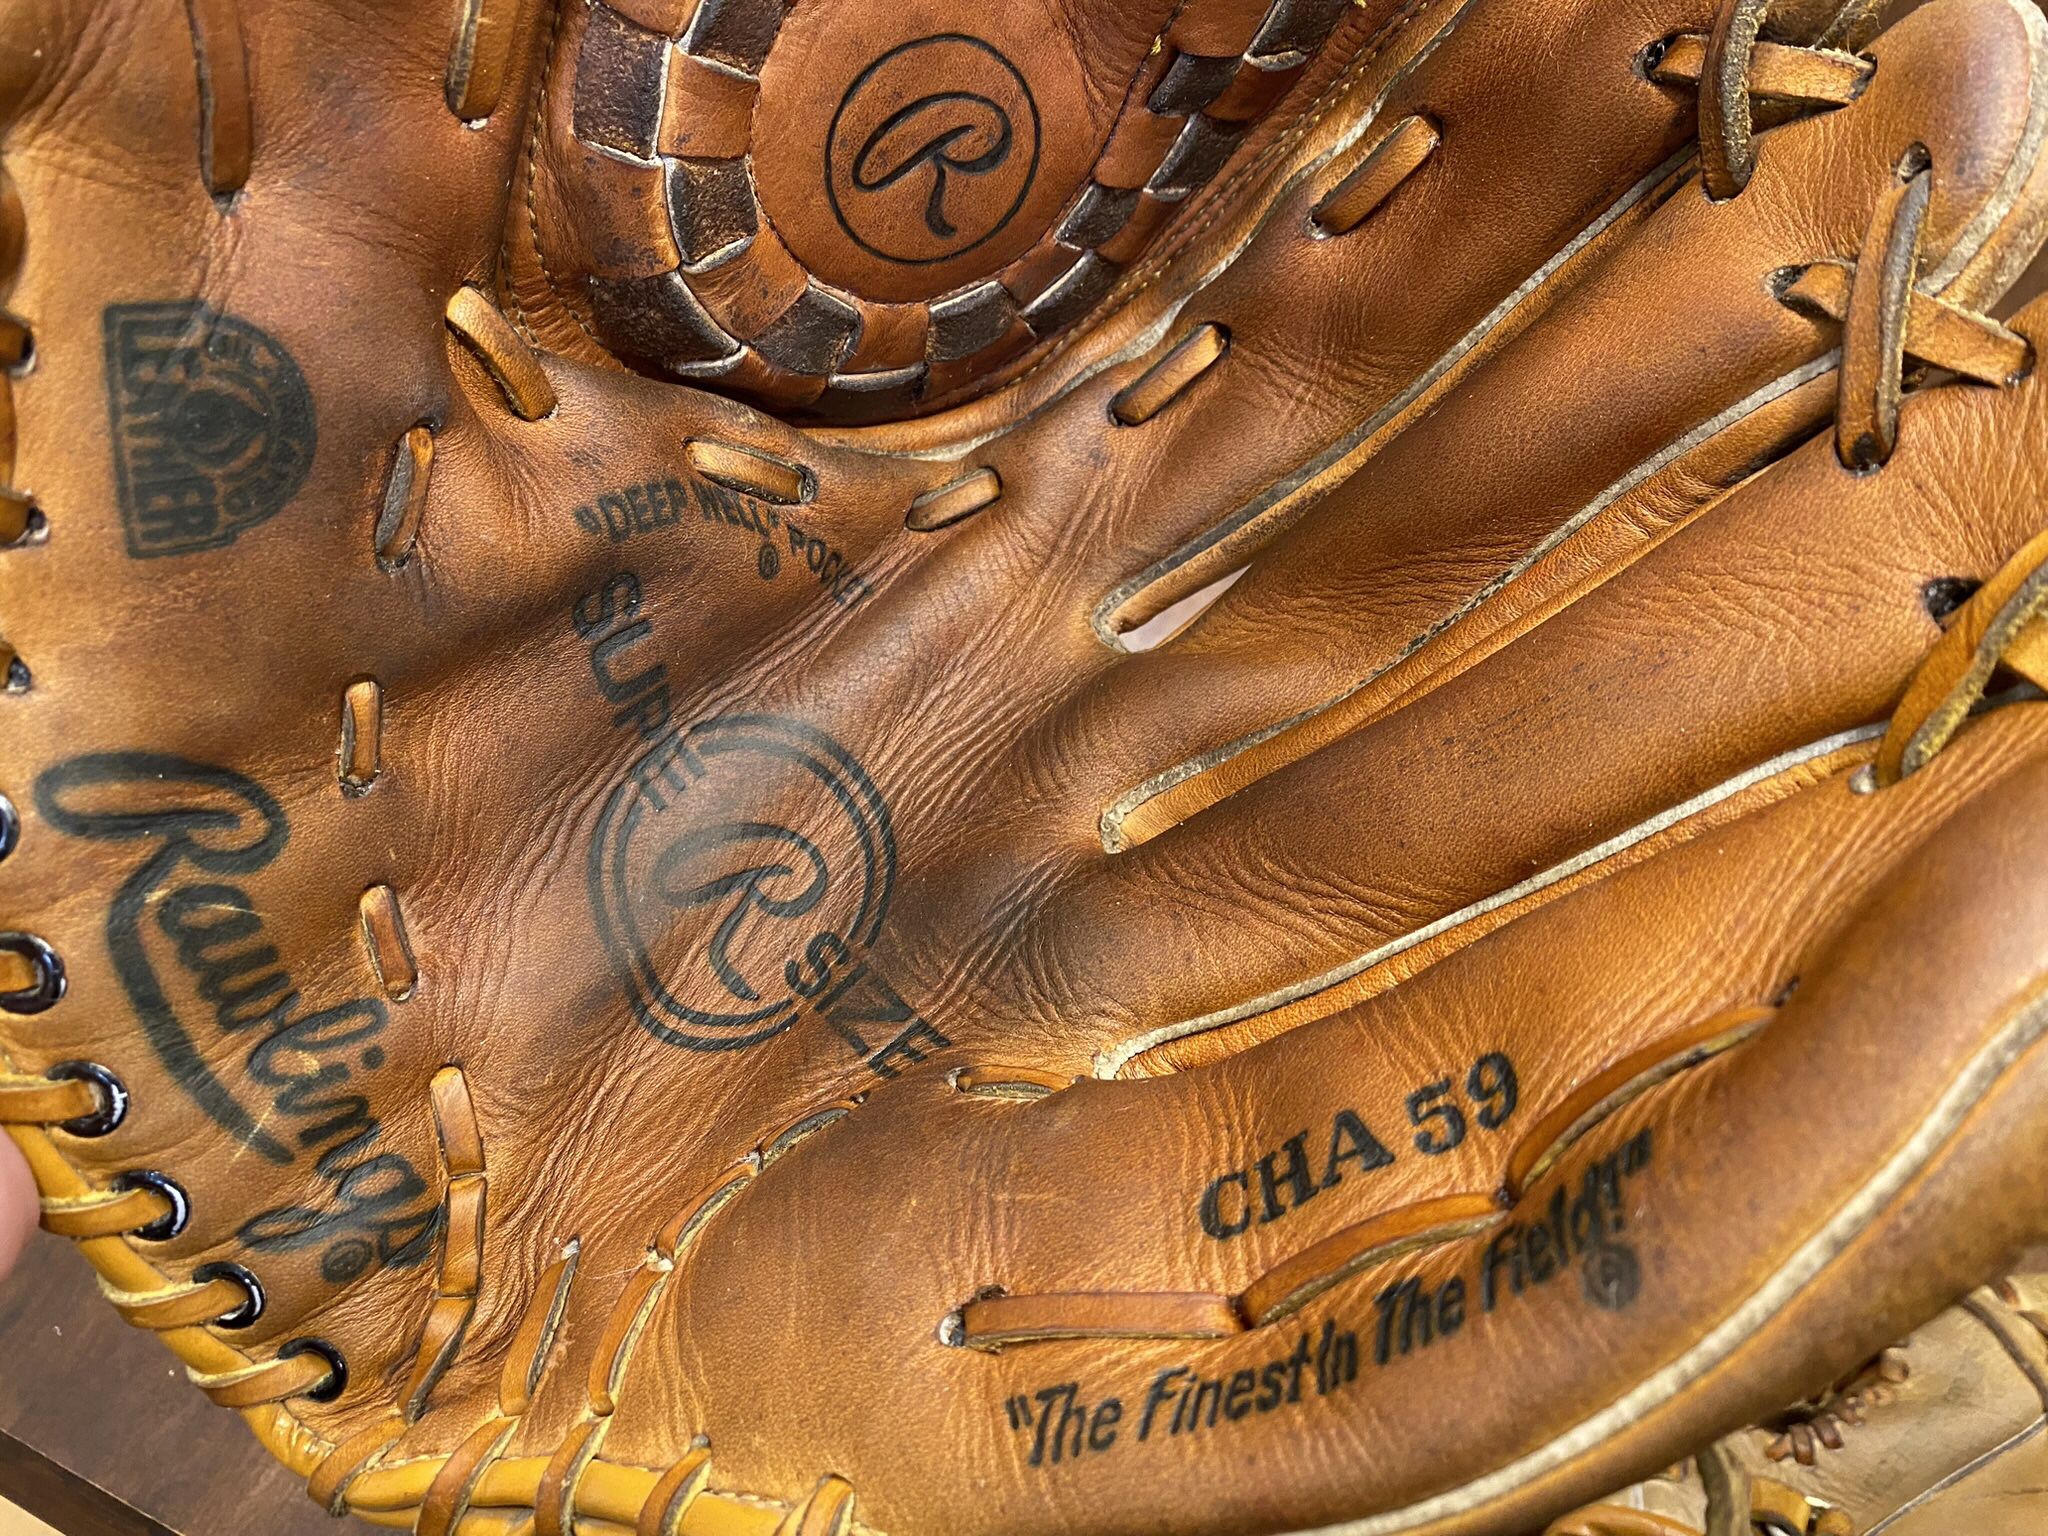 Two Large Rawlings Softball / Baseball Gloves